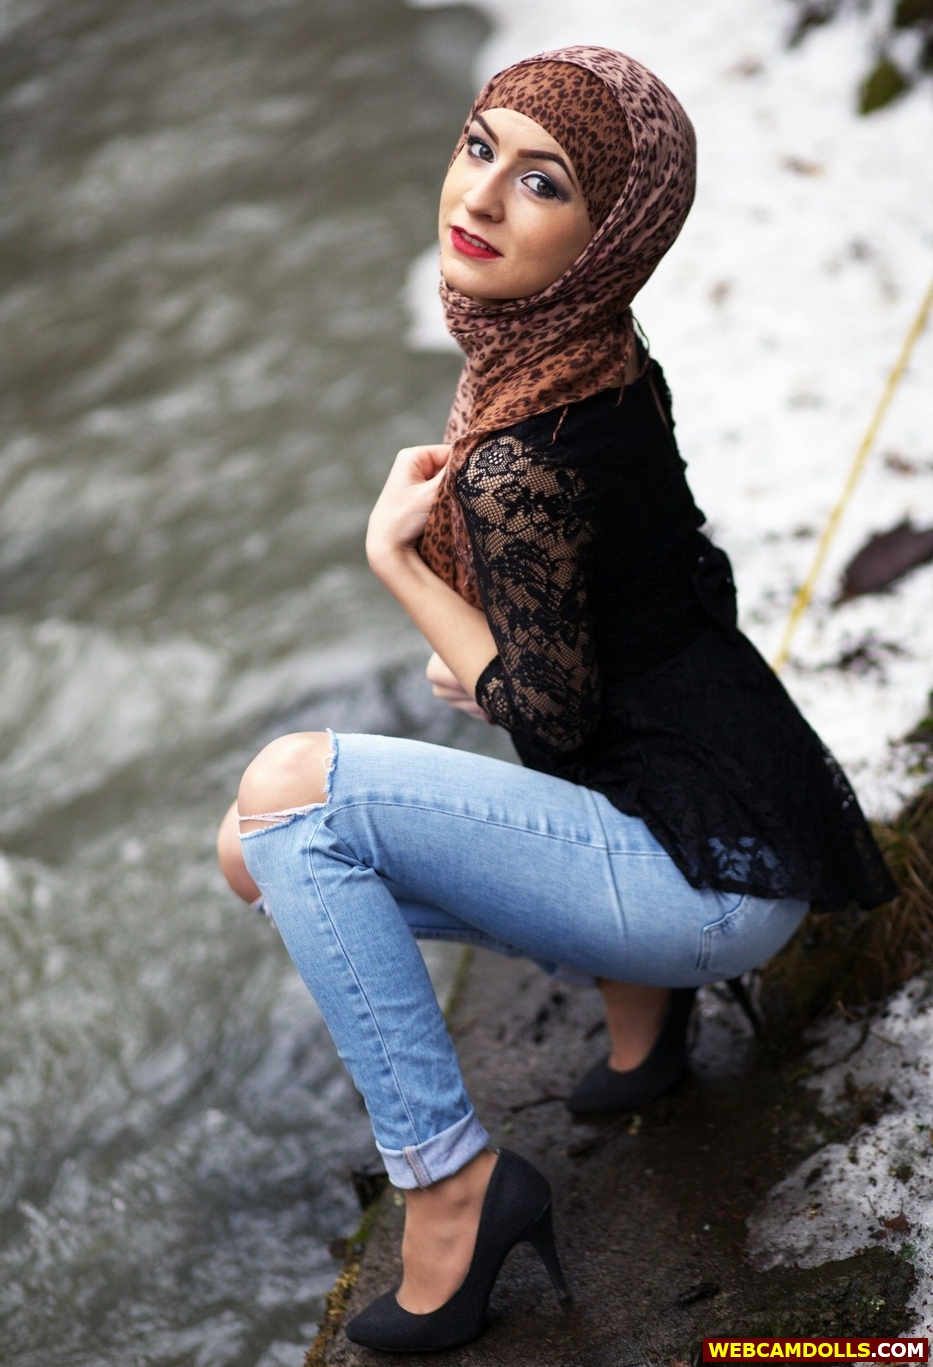 Arab Muslim Girl in Ripped Blue Jean and Black Stilettos on Webcamdolls